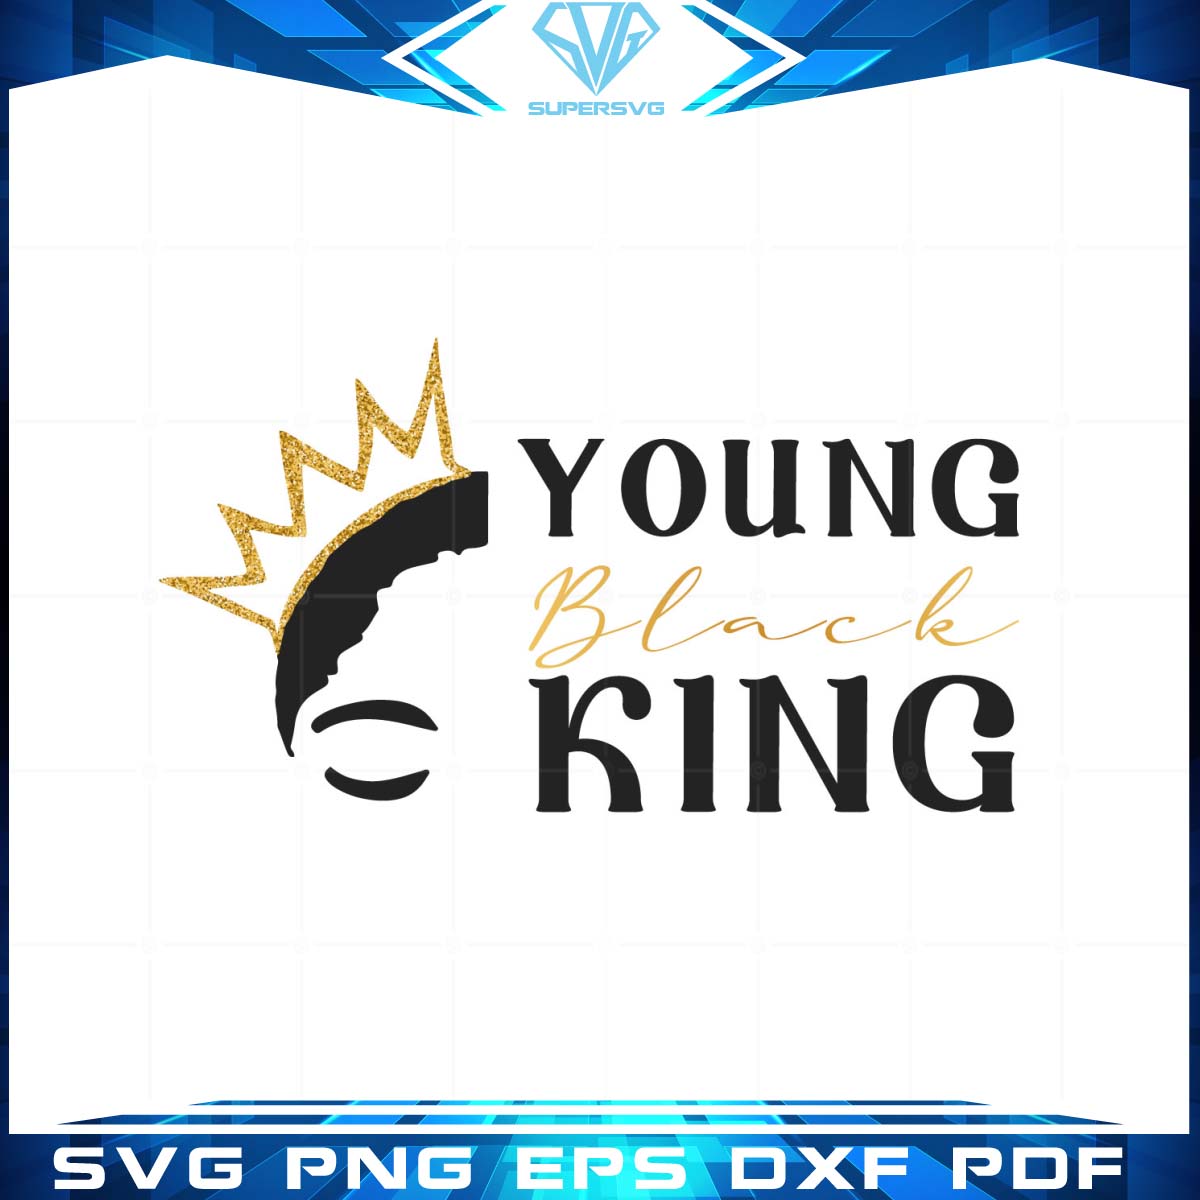 Young black king SVG Cricut files